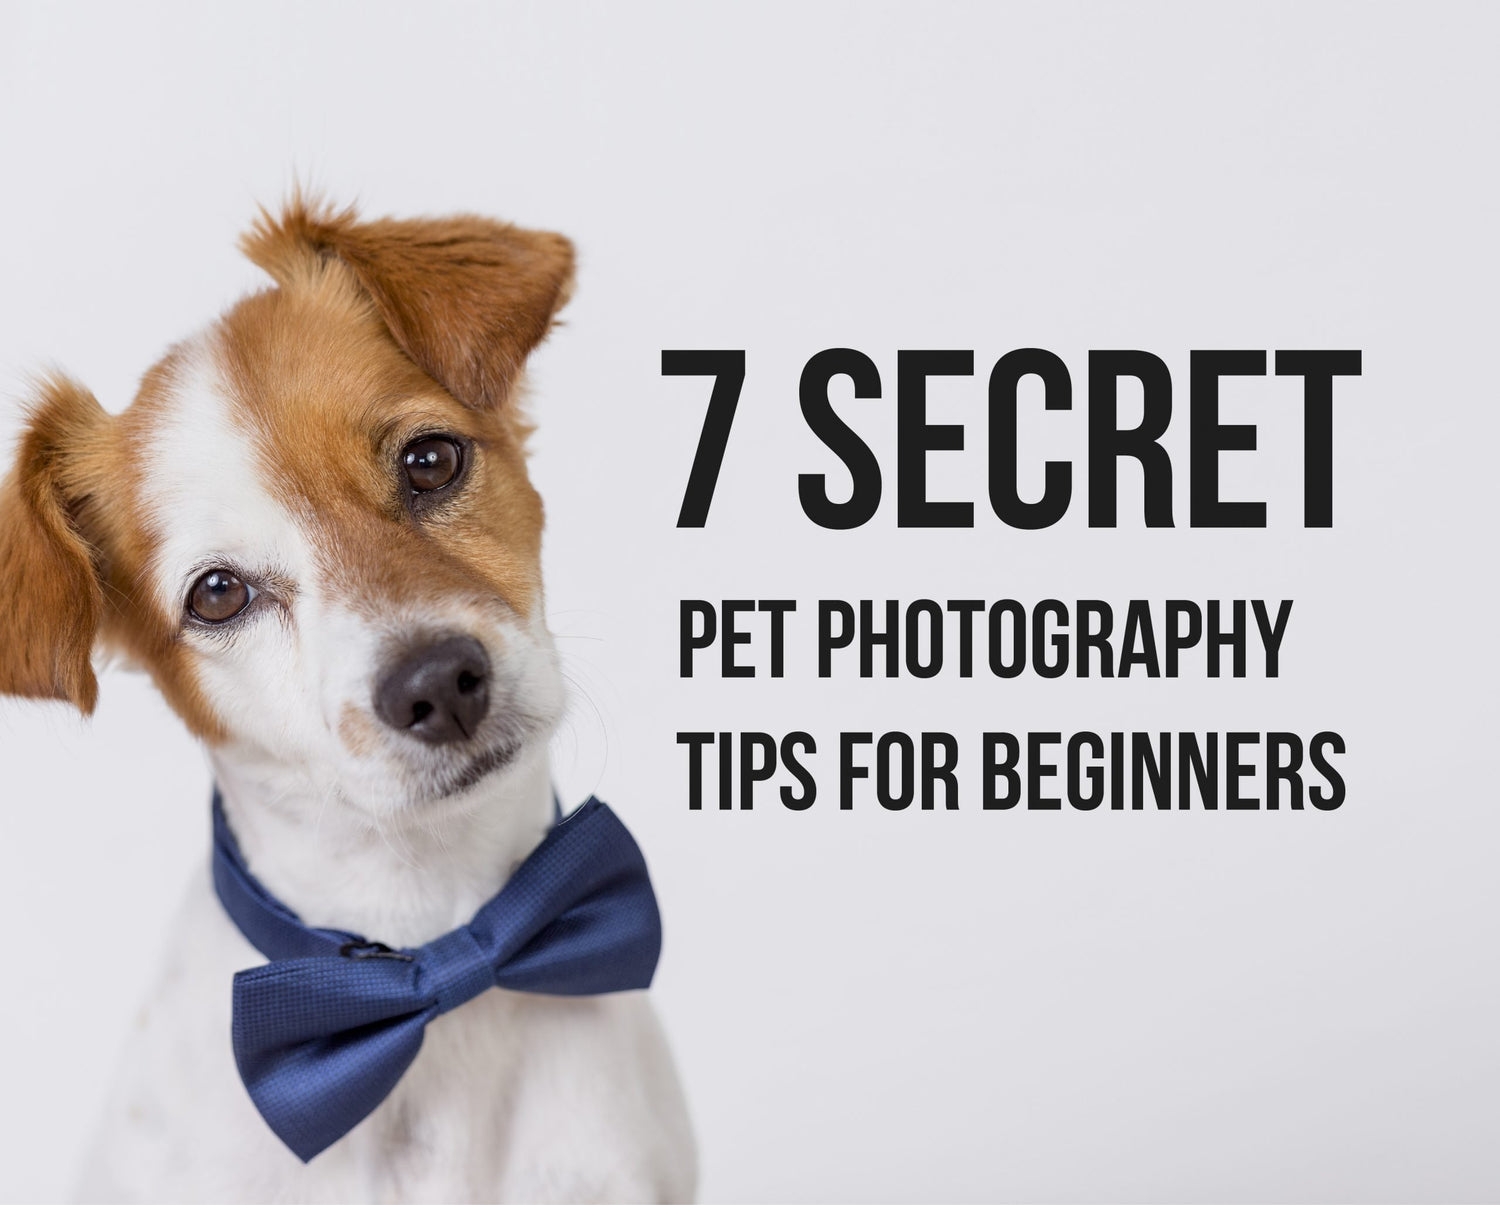 7 Secret Pet Photography Tips for Beginners